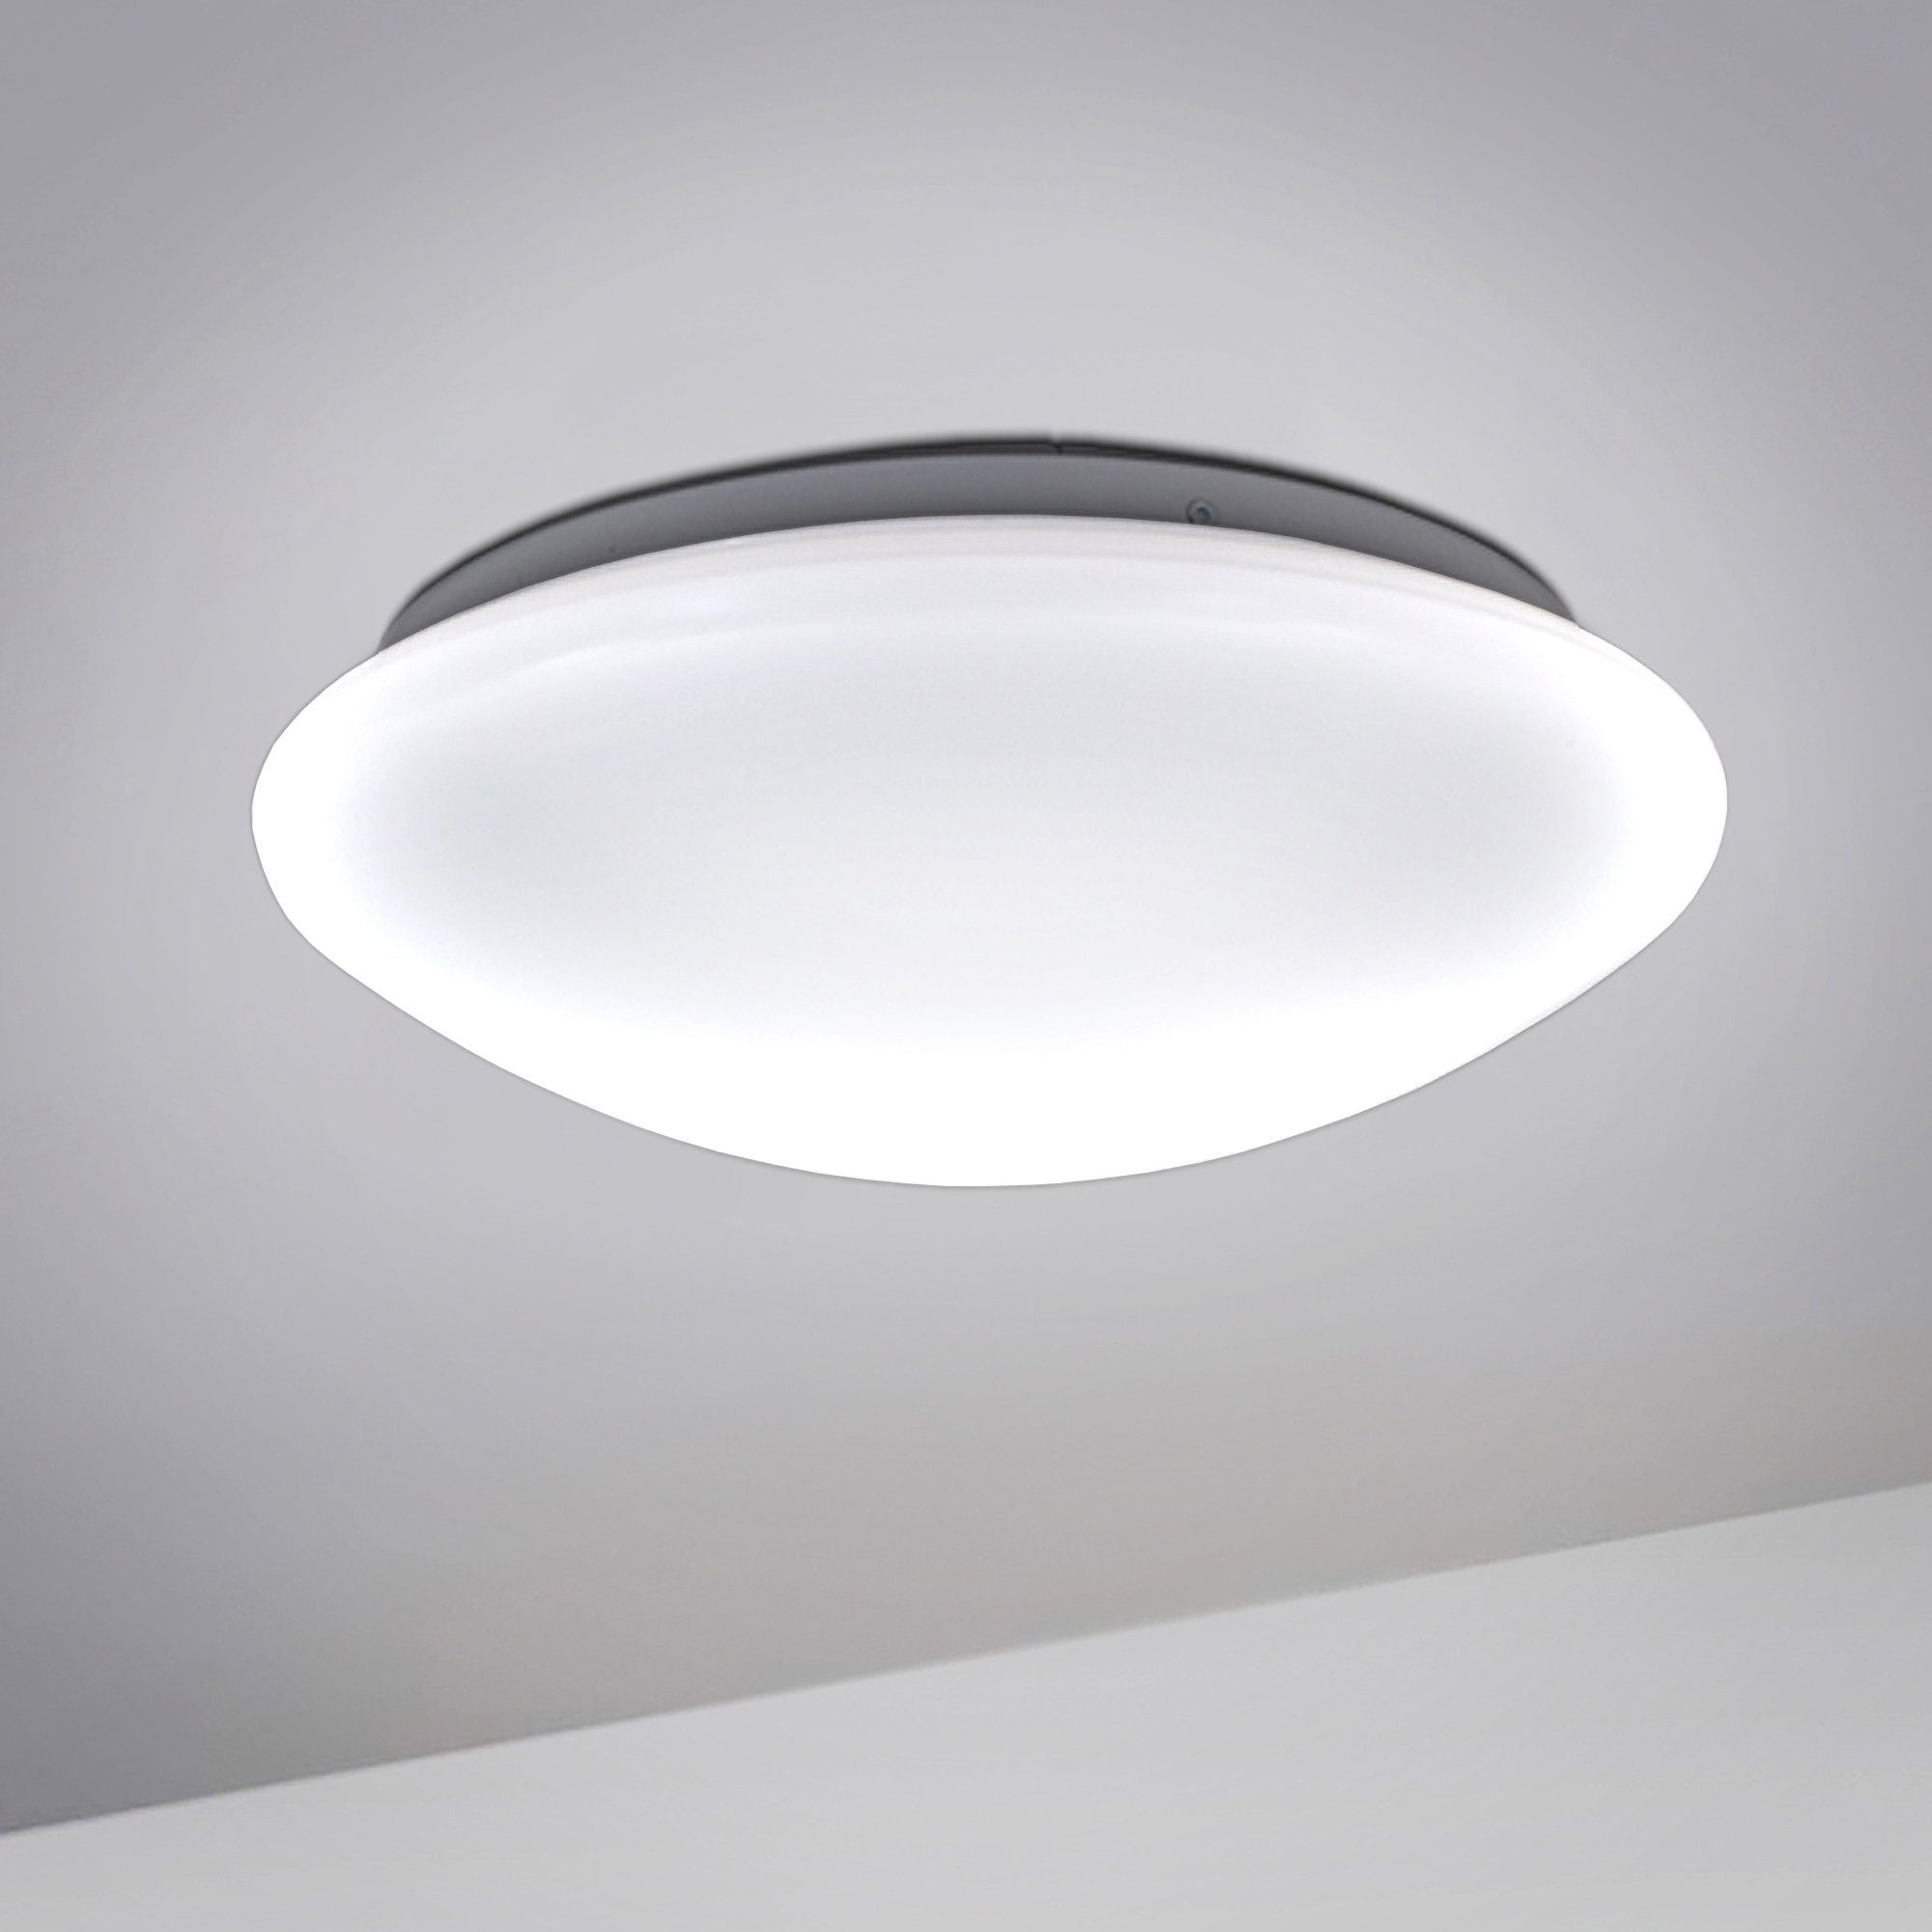 LED Deckenleuchte LED Lampe Wohnzimmerlampe Deckenstrahler Panel Badlampe 